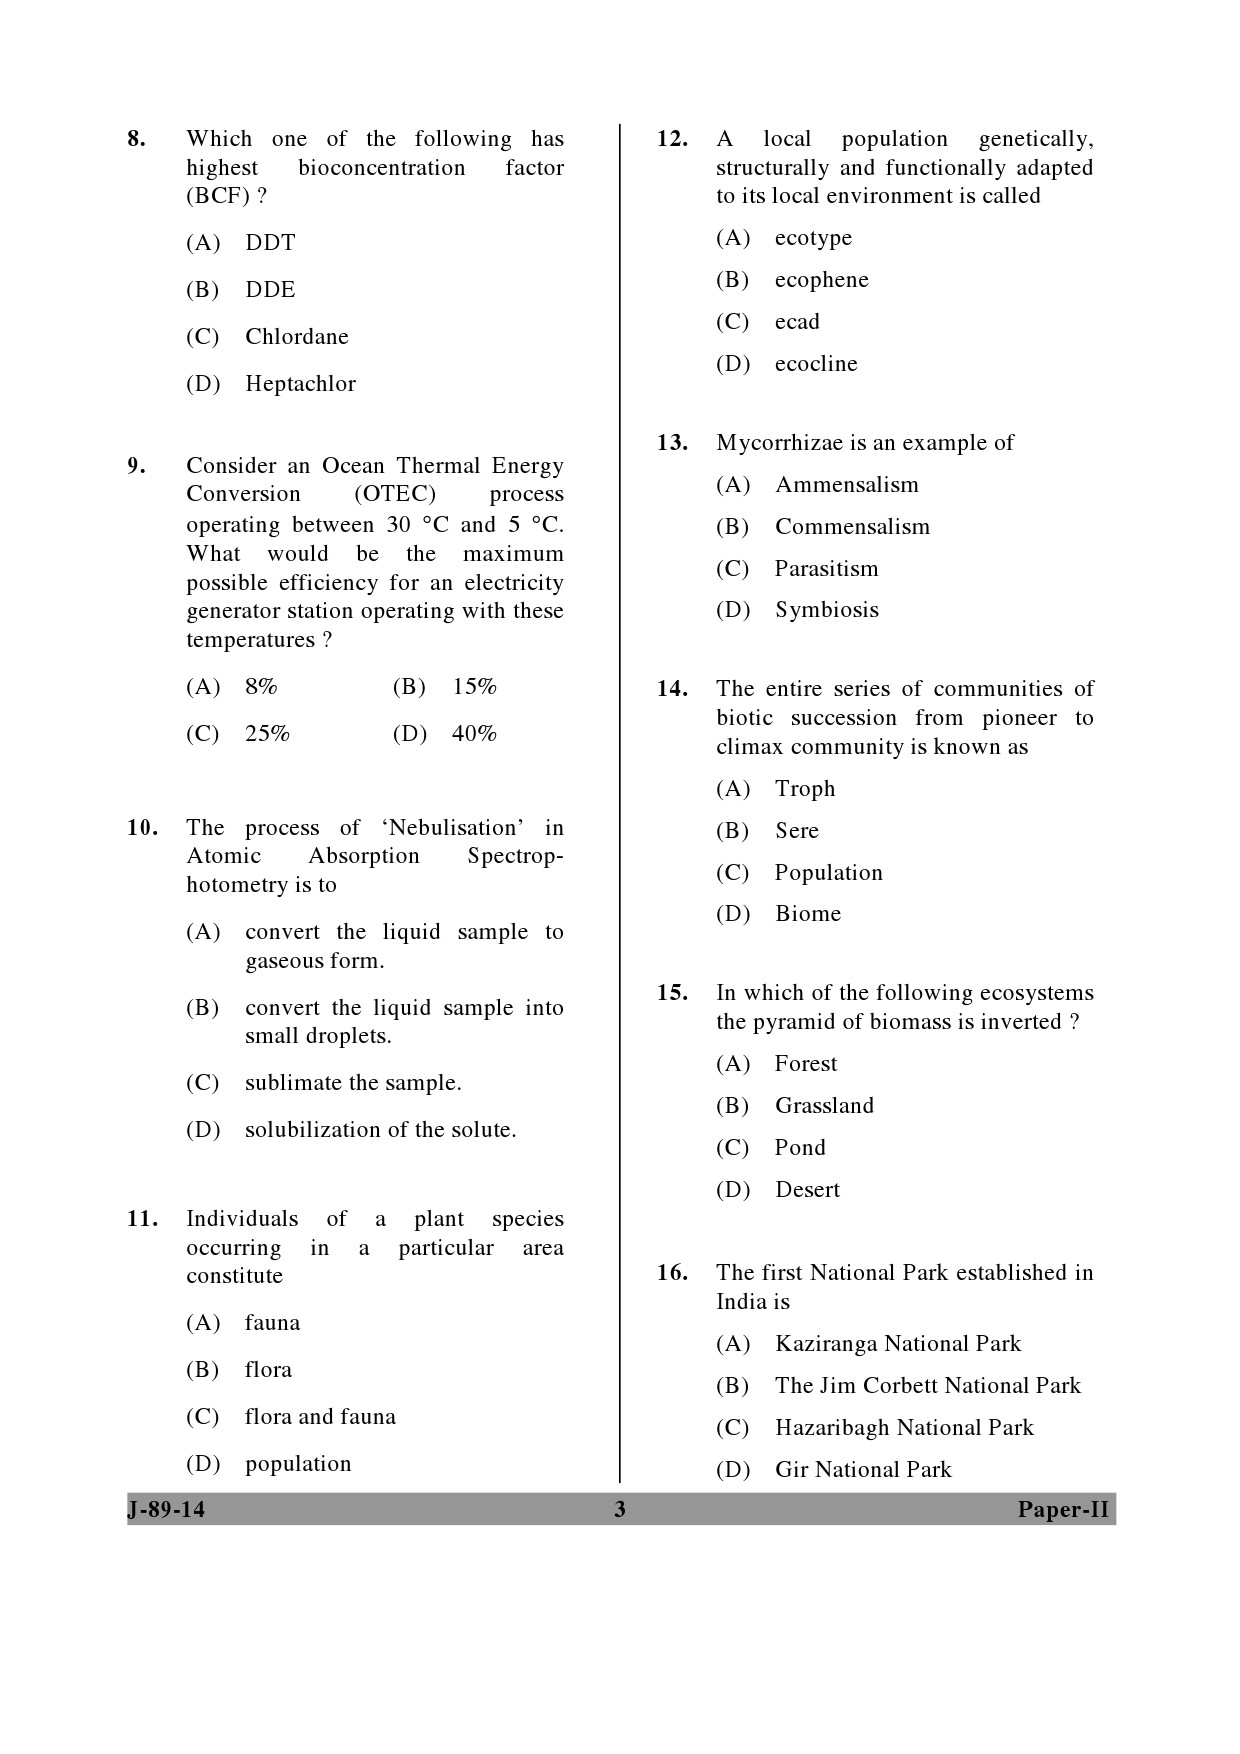 UGC NET Environmental Science Question Paper II June 2014 3